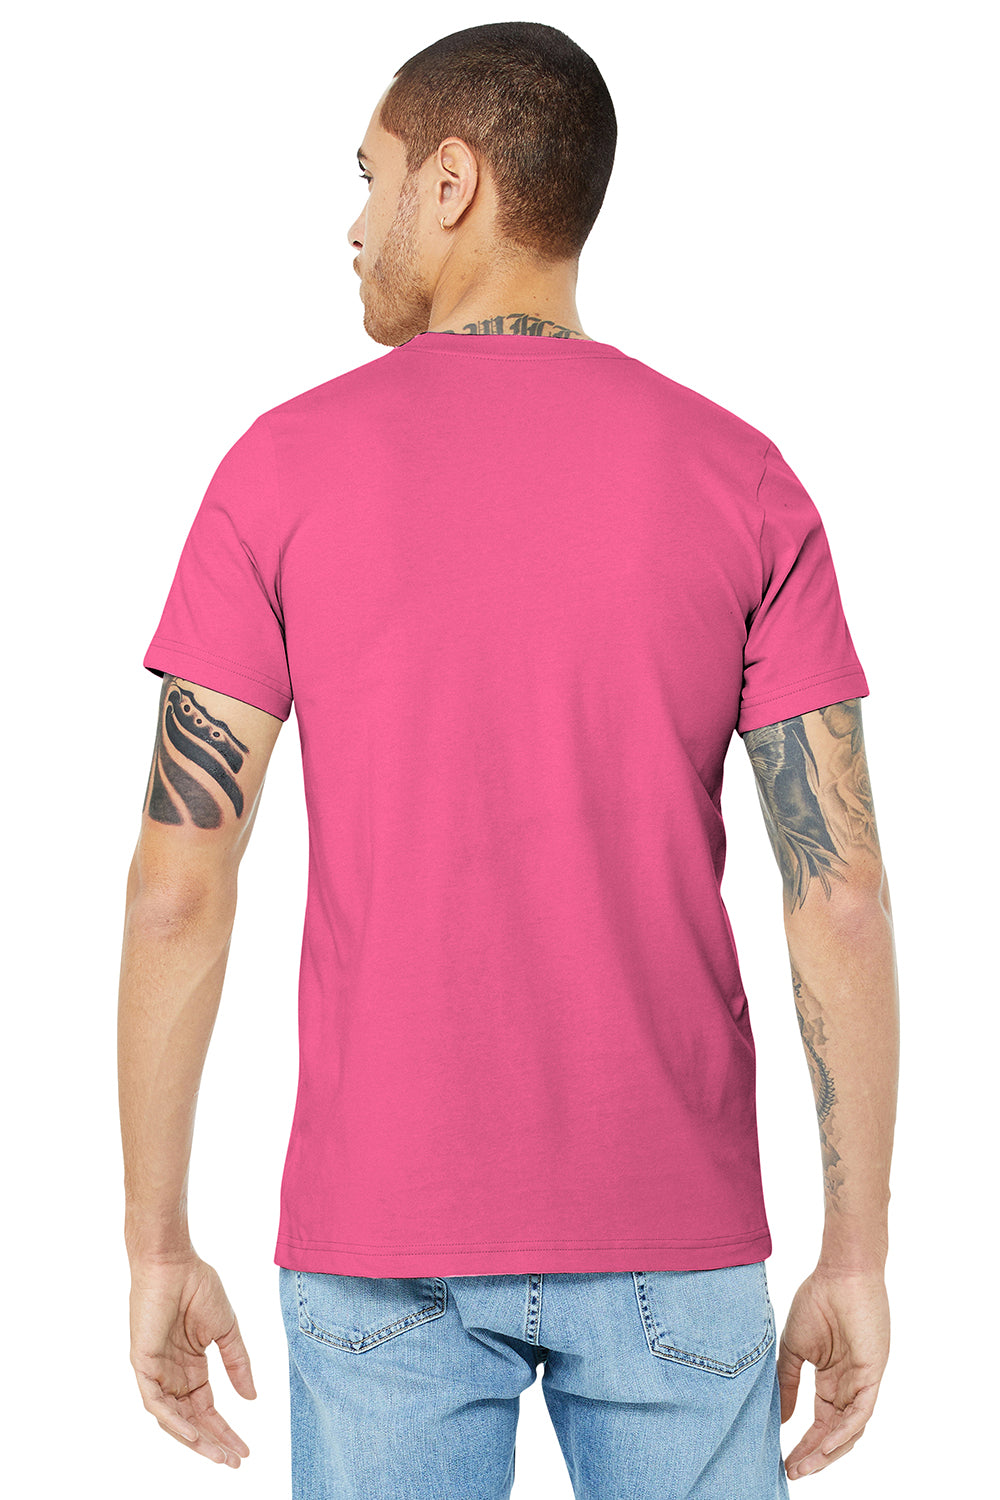 Bella + Canvas BC3001/3001C Mens Jersey Short Sleeve Crewneck T-Shirt Charity Pink Model Back